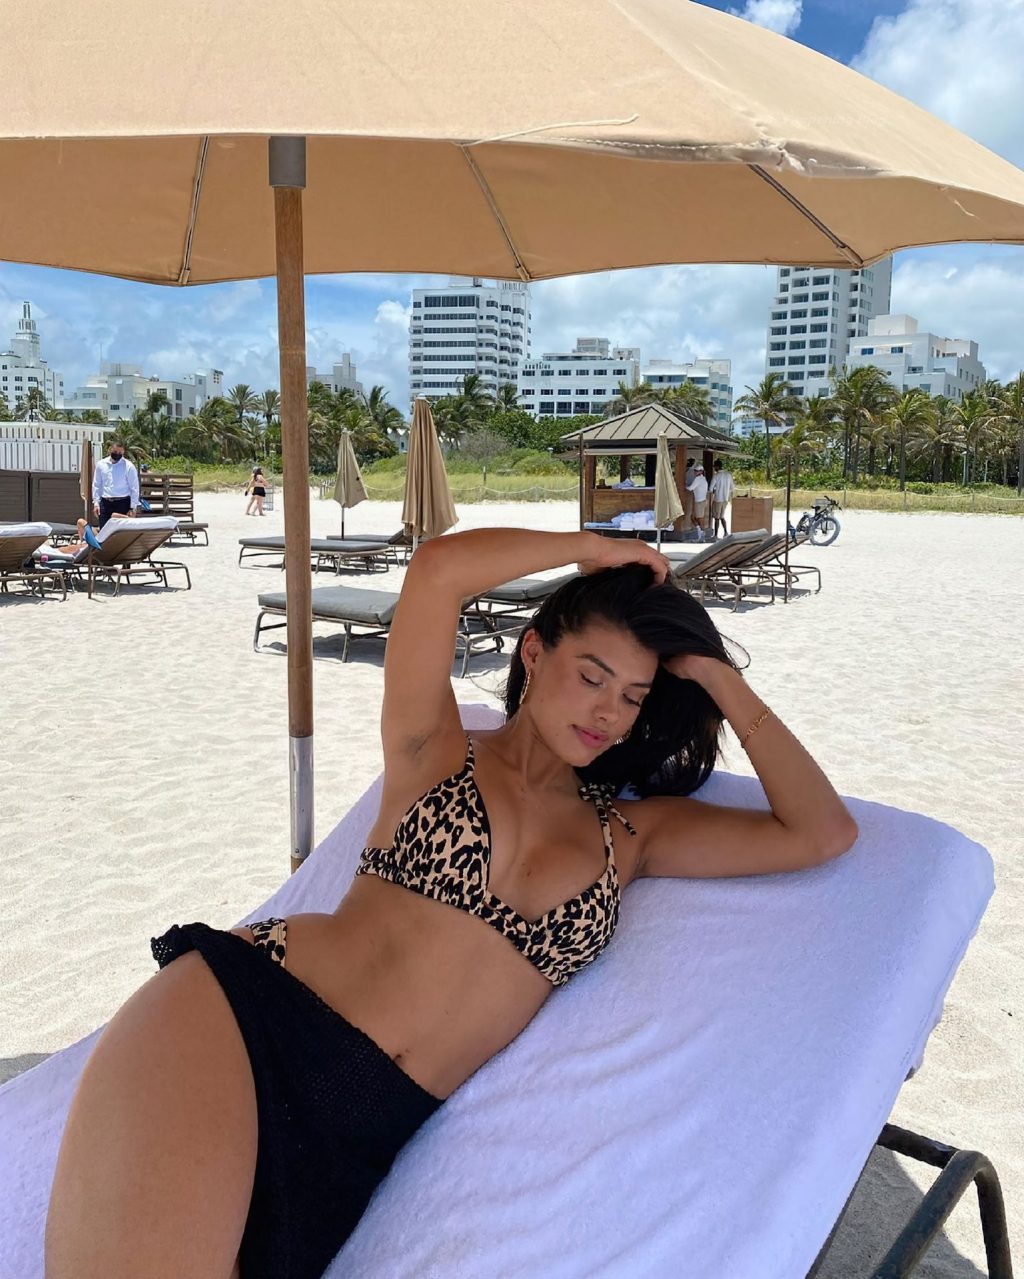 Sophia Gasca Looks Hot in an Animal Print Bikini at the Beach in Miami (24 Photos)